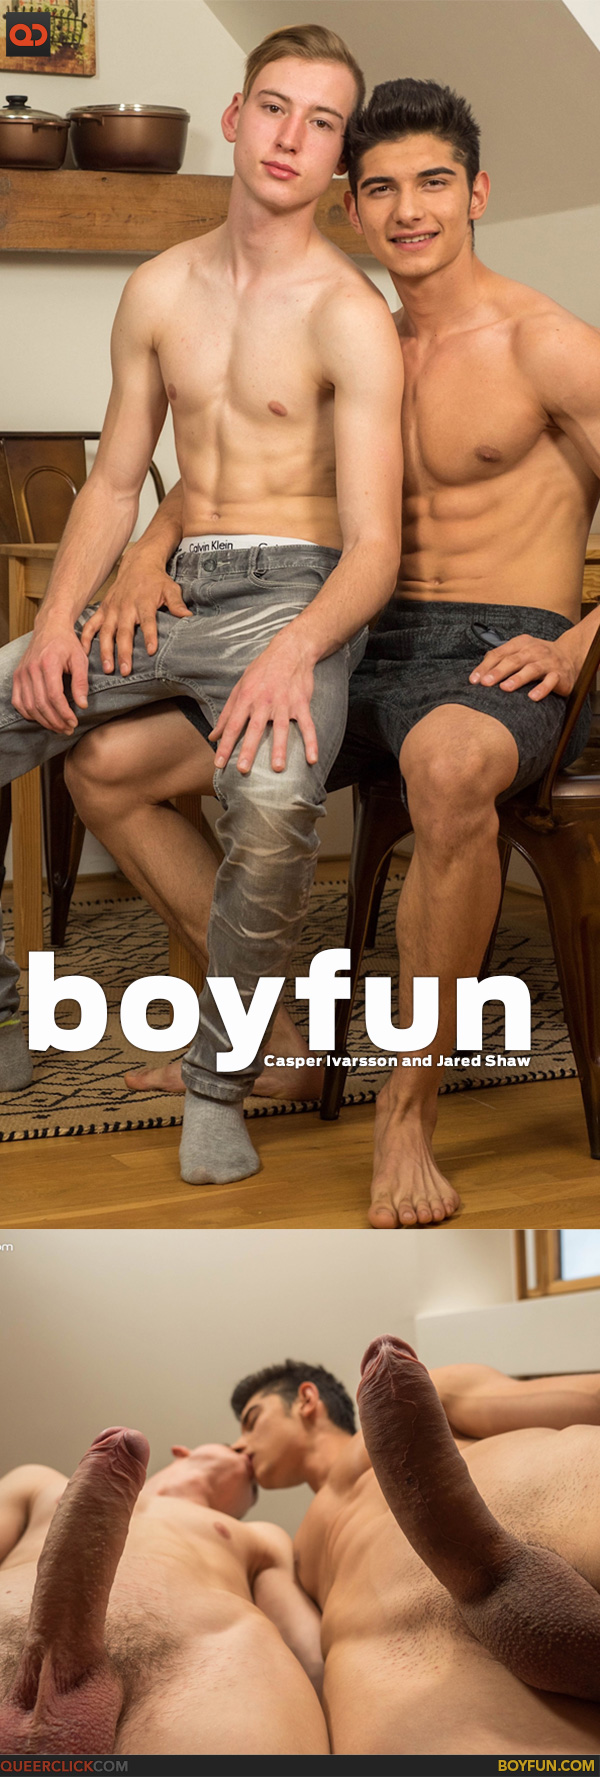 BoyFun: Casper Ivarsson and Jared Shaw